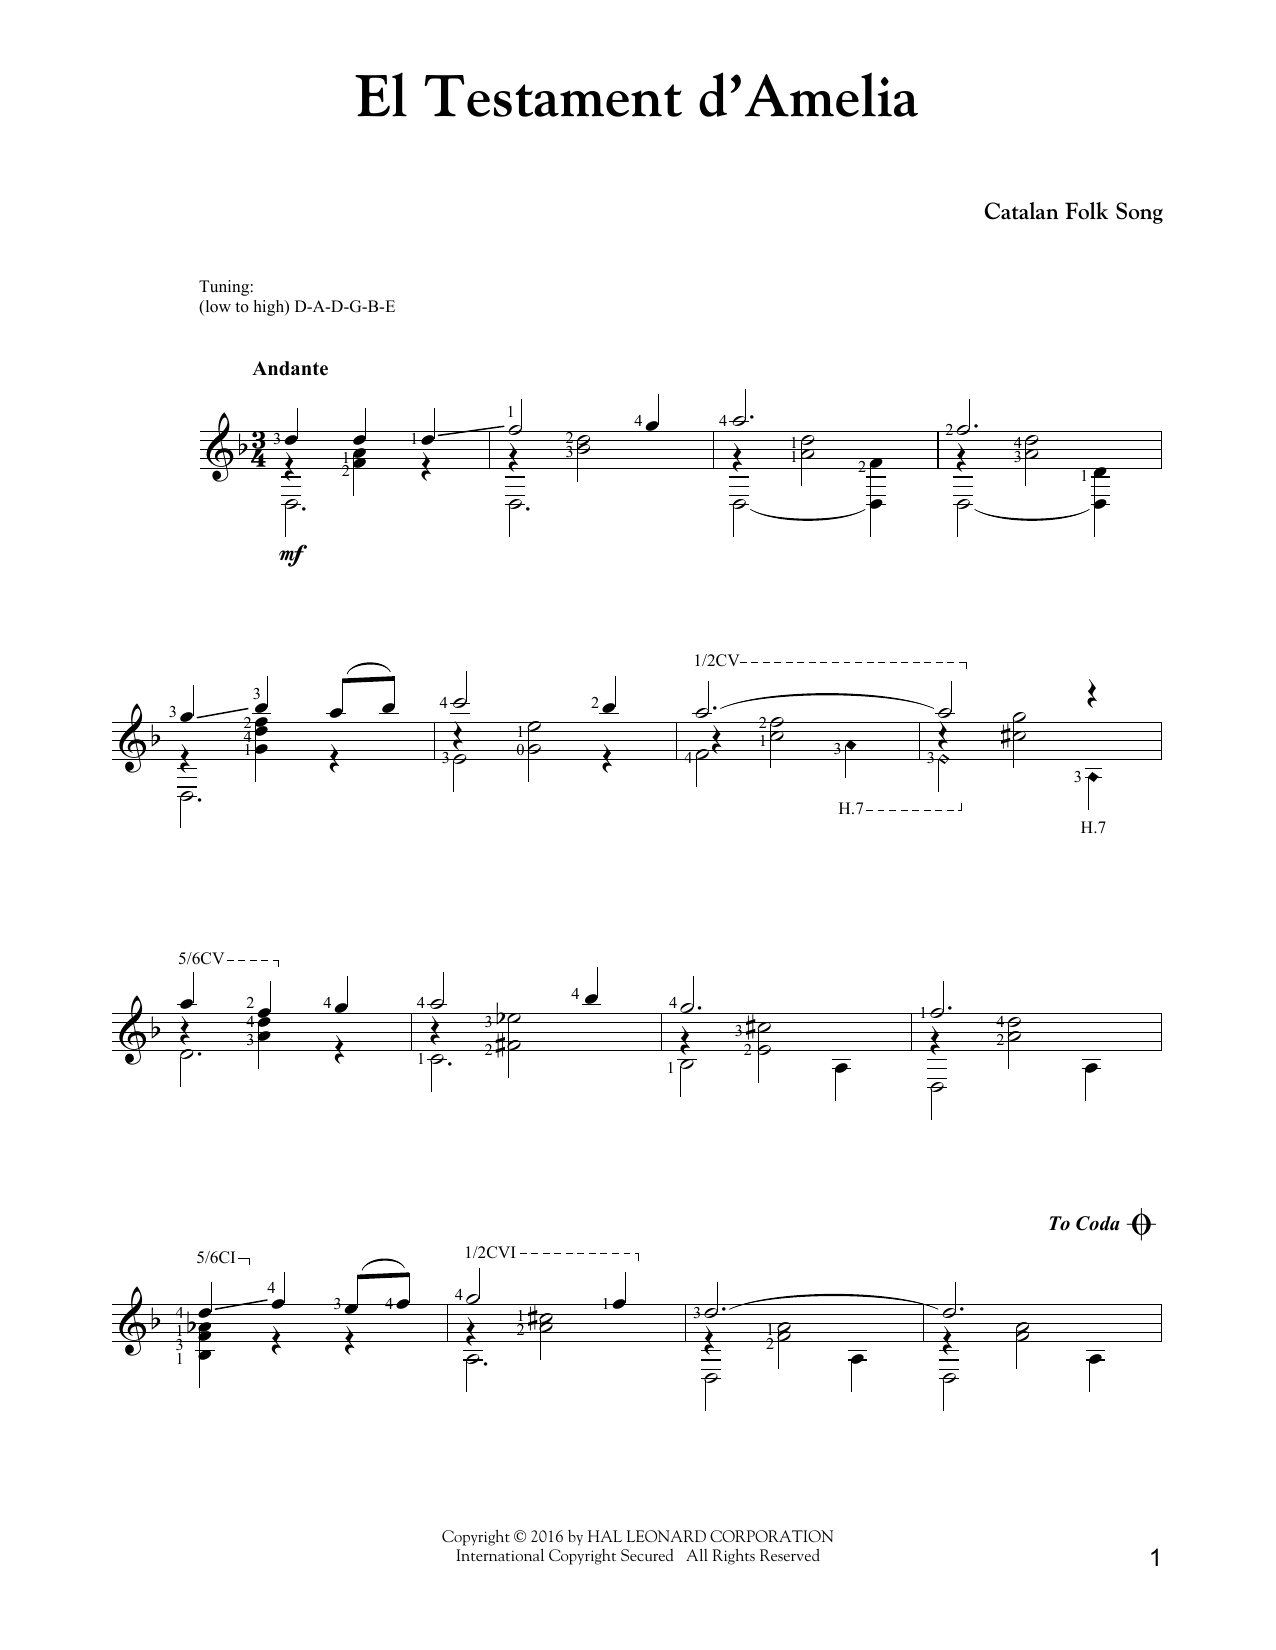 J.S. Bach El Testament D'Amelia Sheet Music Notes & Chords for Guitar Tab - Download or Print PDF